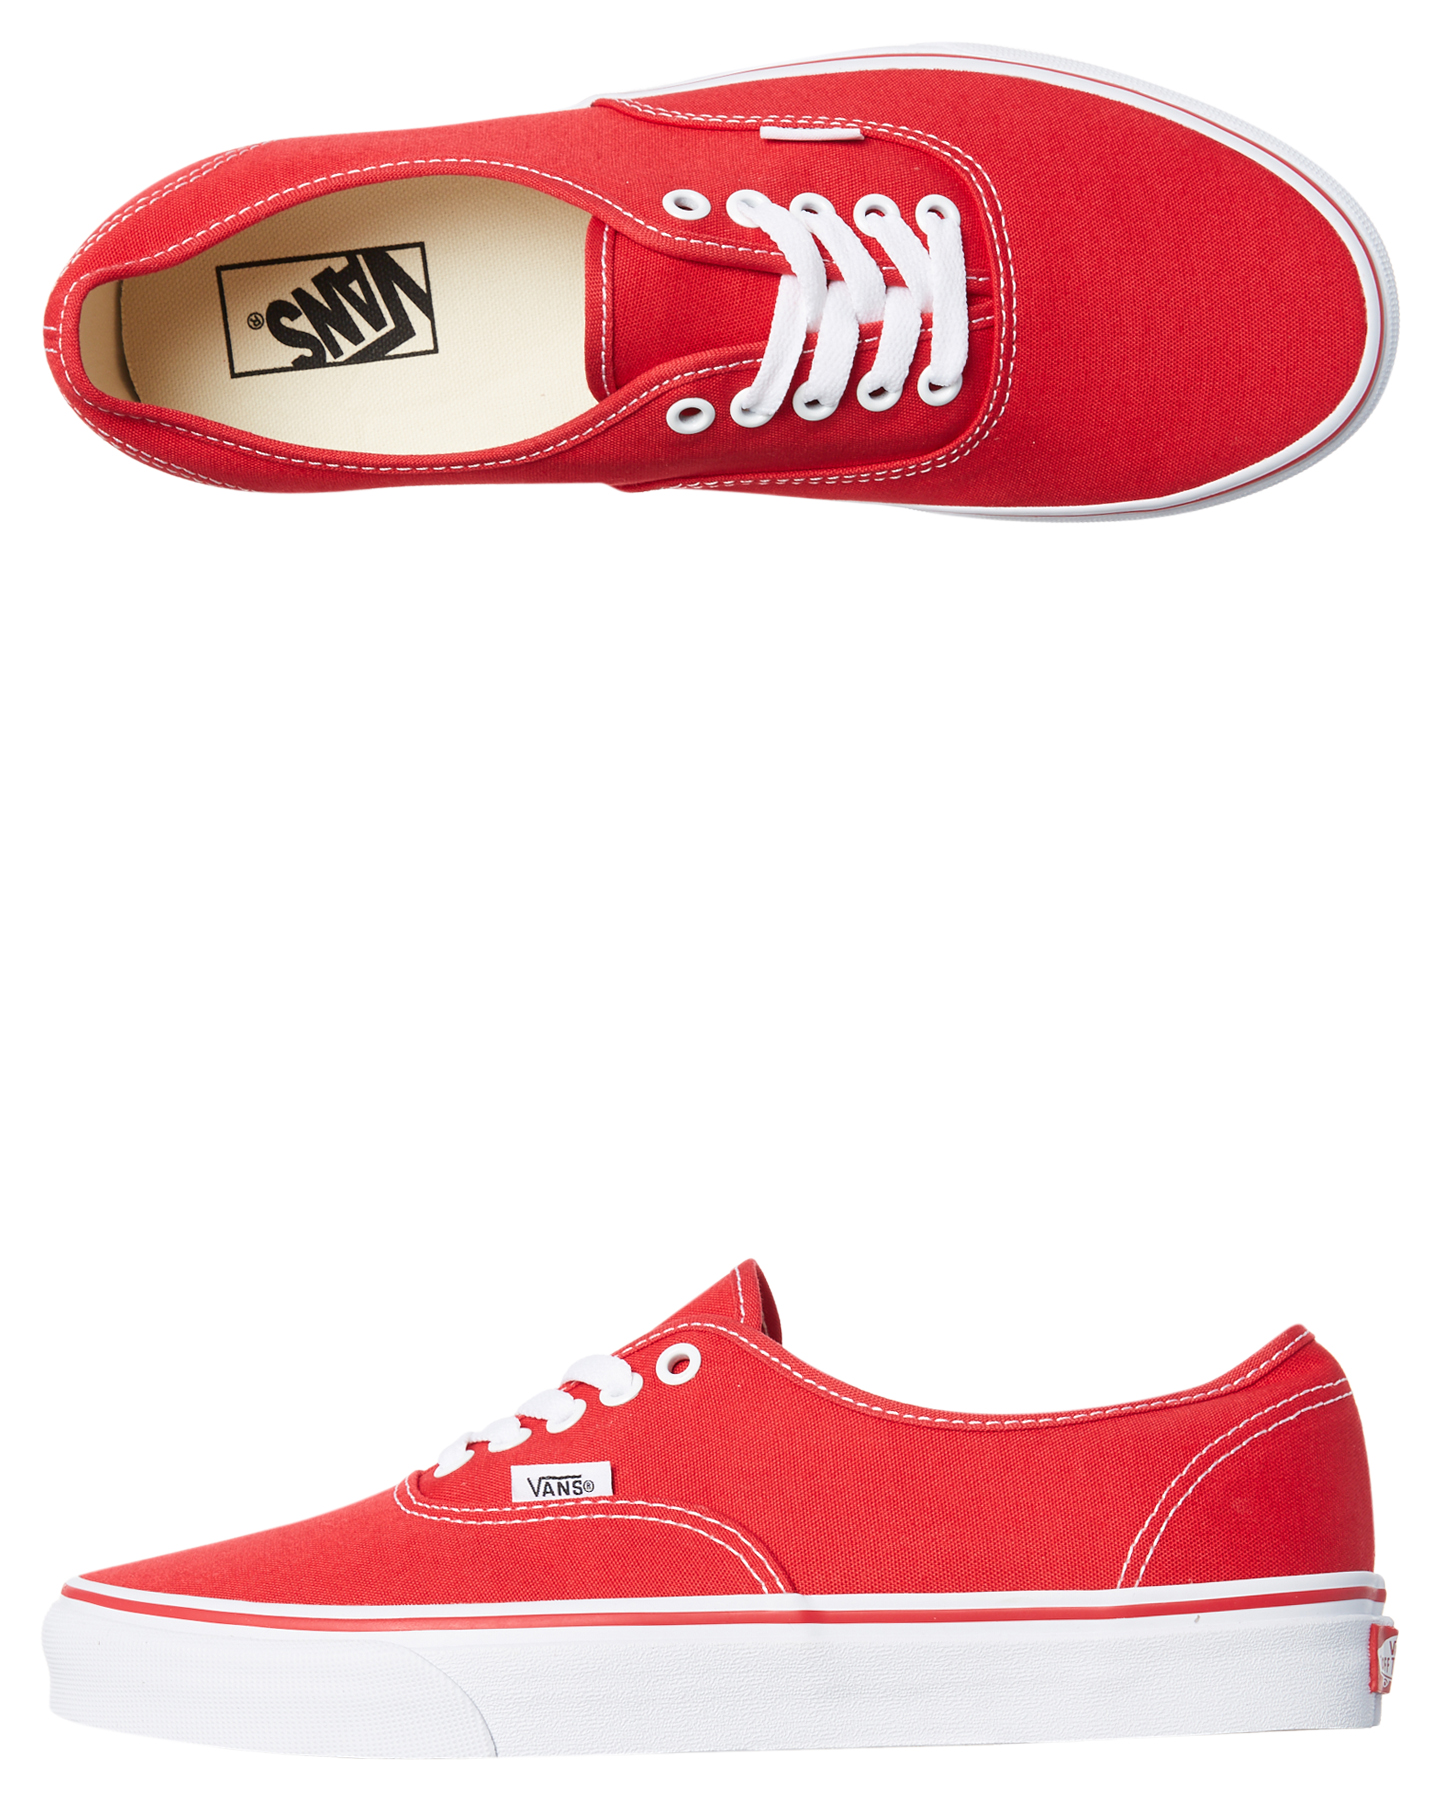 Vans Mens Authentic Shoe - Red | SurfStitch